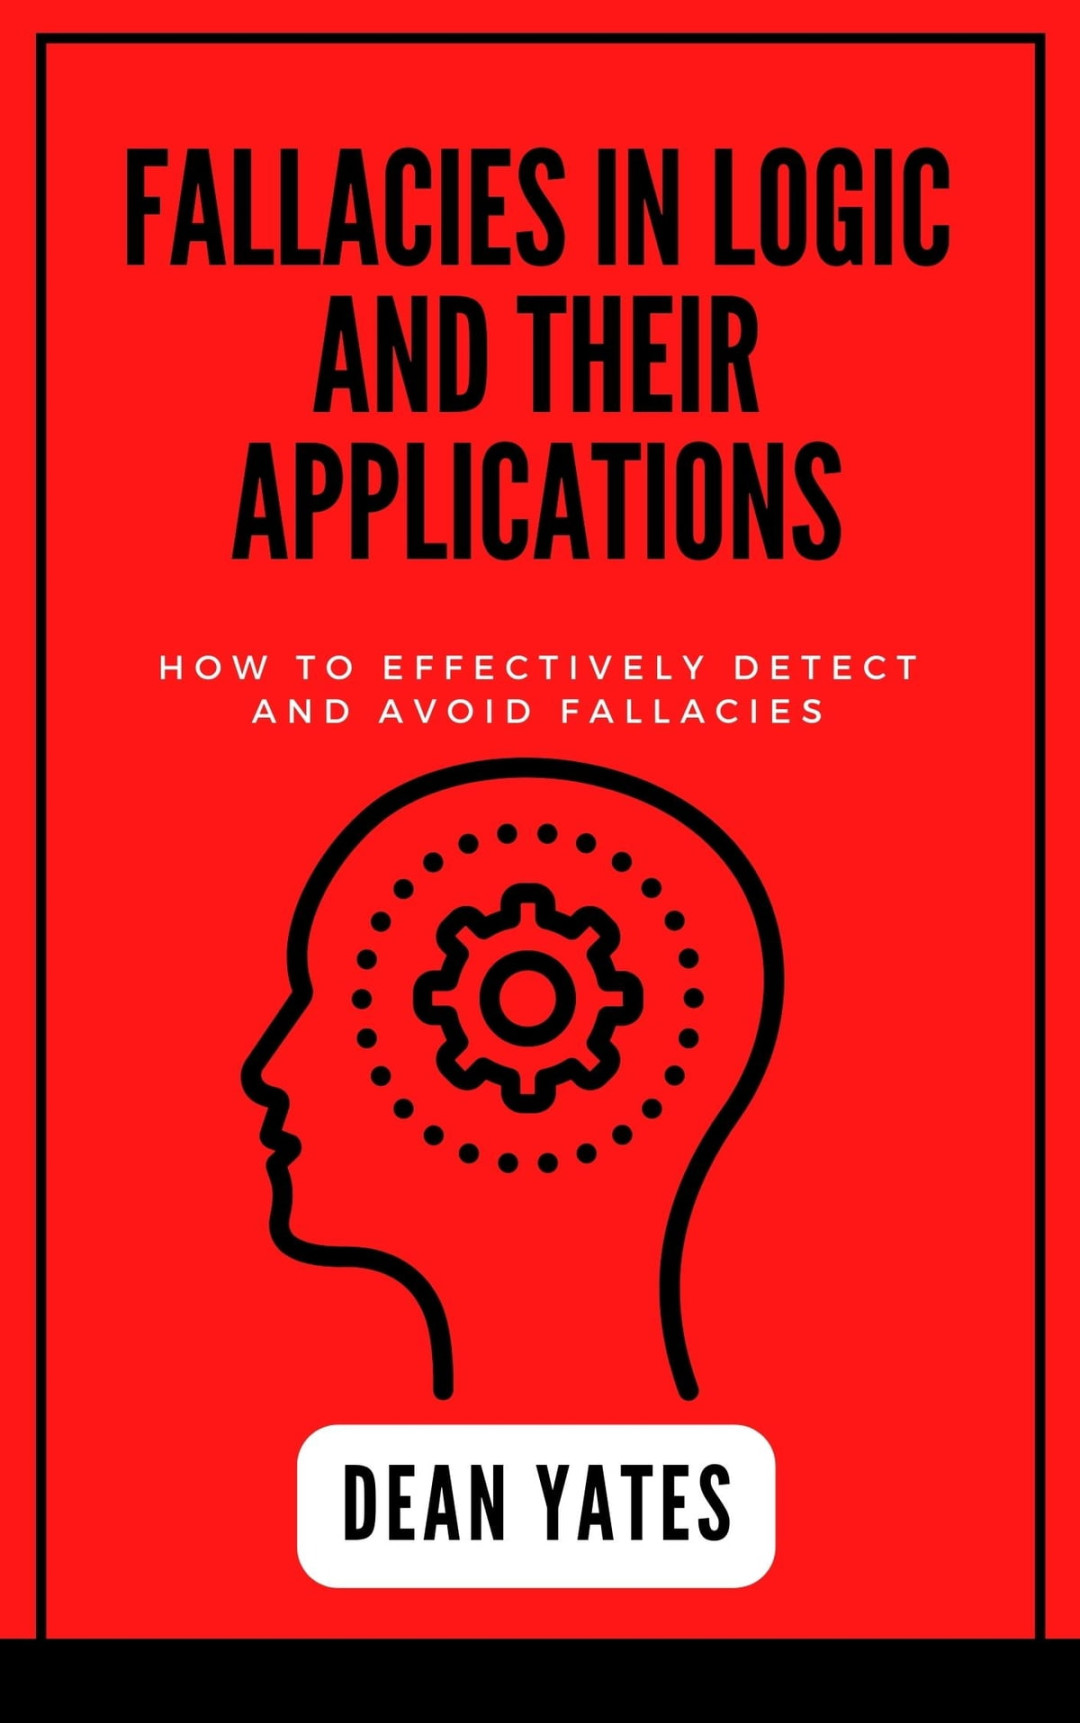 Fallacies in Logic and Their Applications ebook by Dean Yates Rakuten Kobo